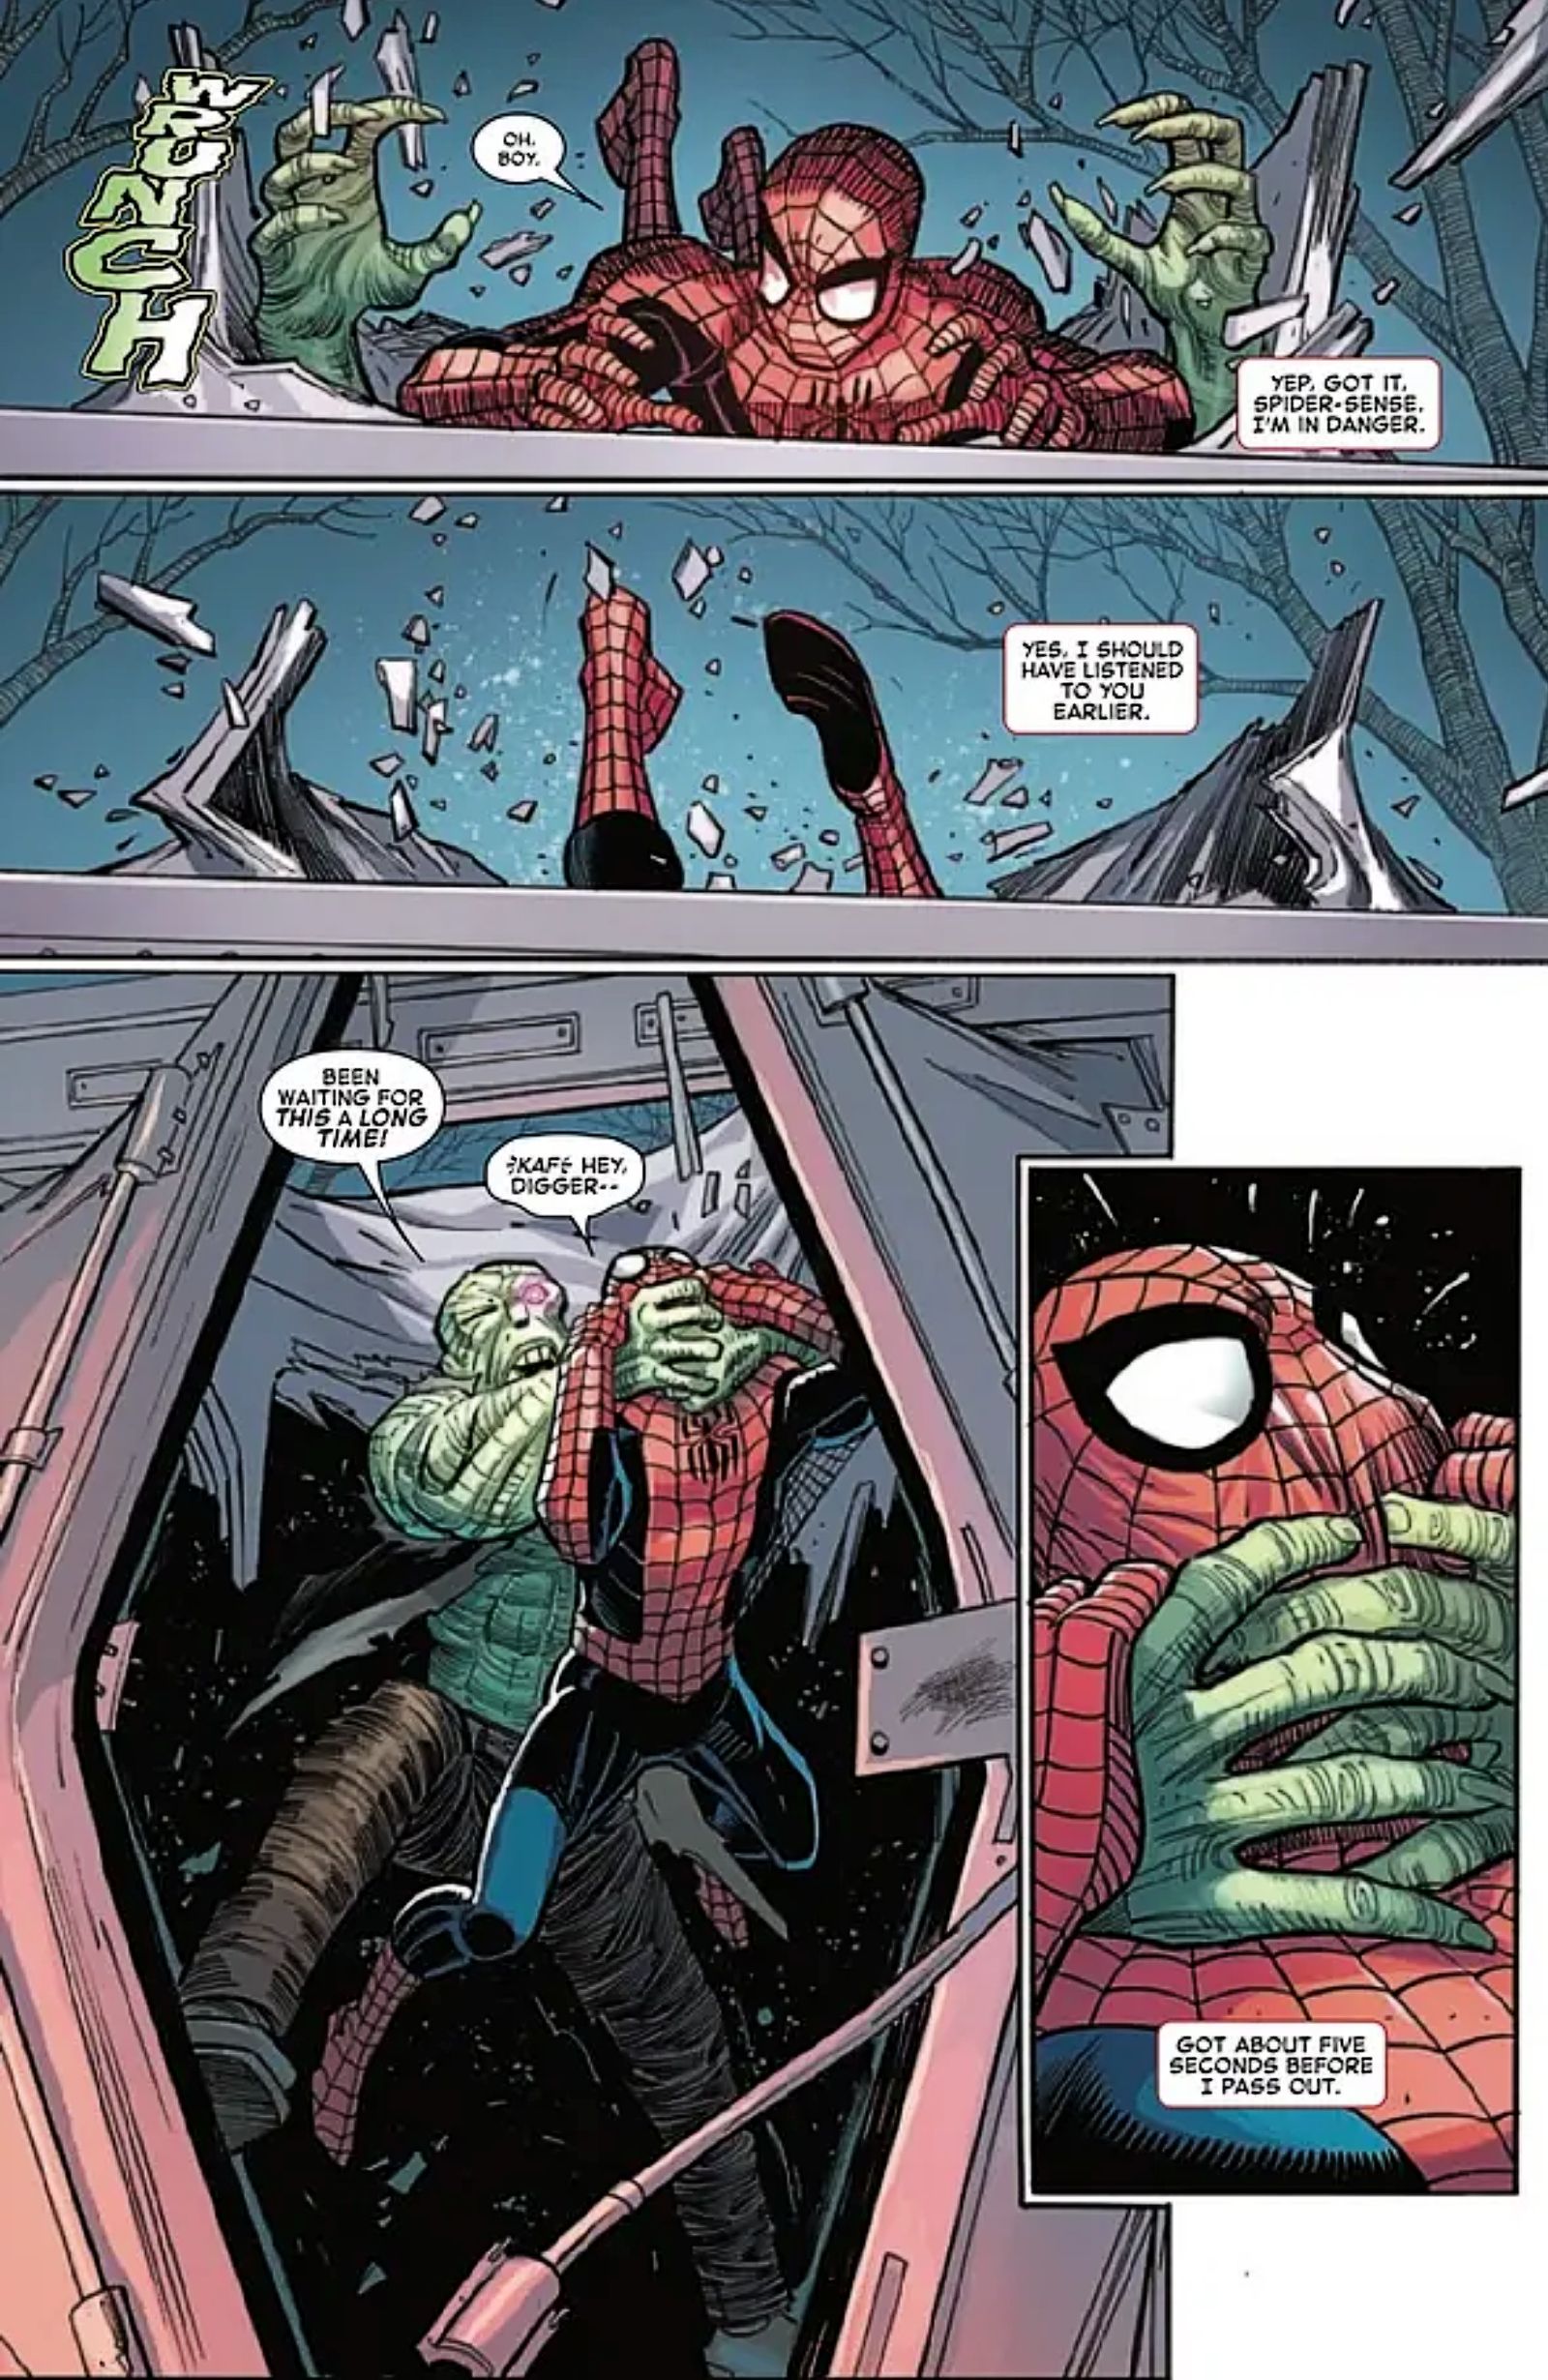 Spider Man fights Digger in brand new Amazing Spider Man series